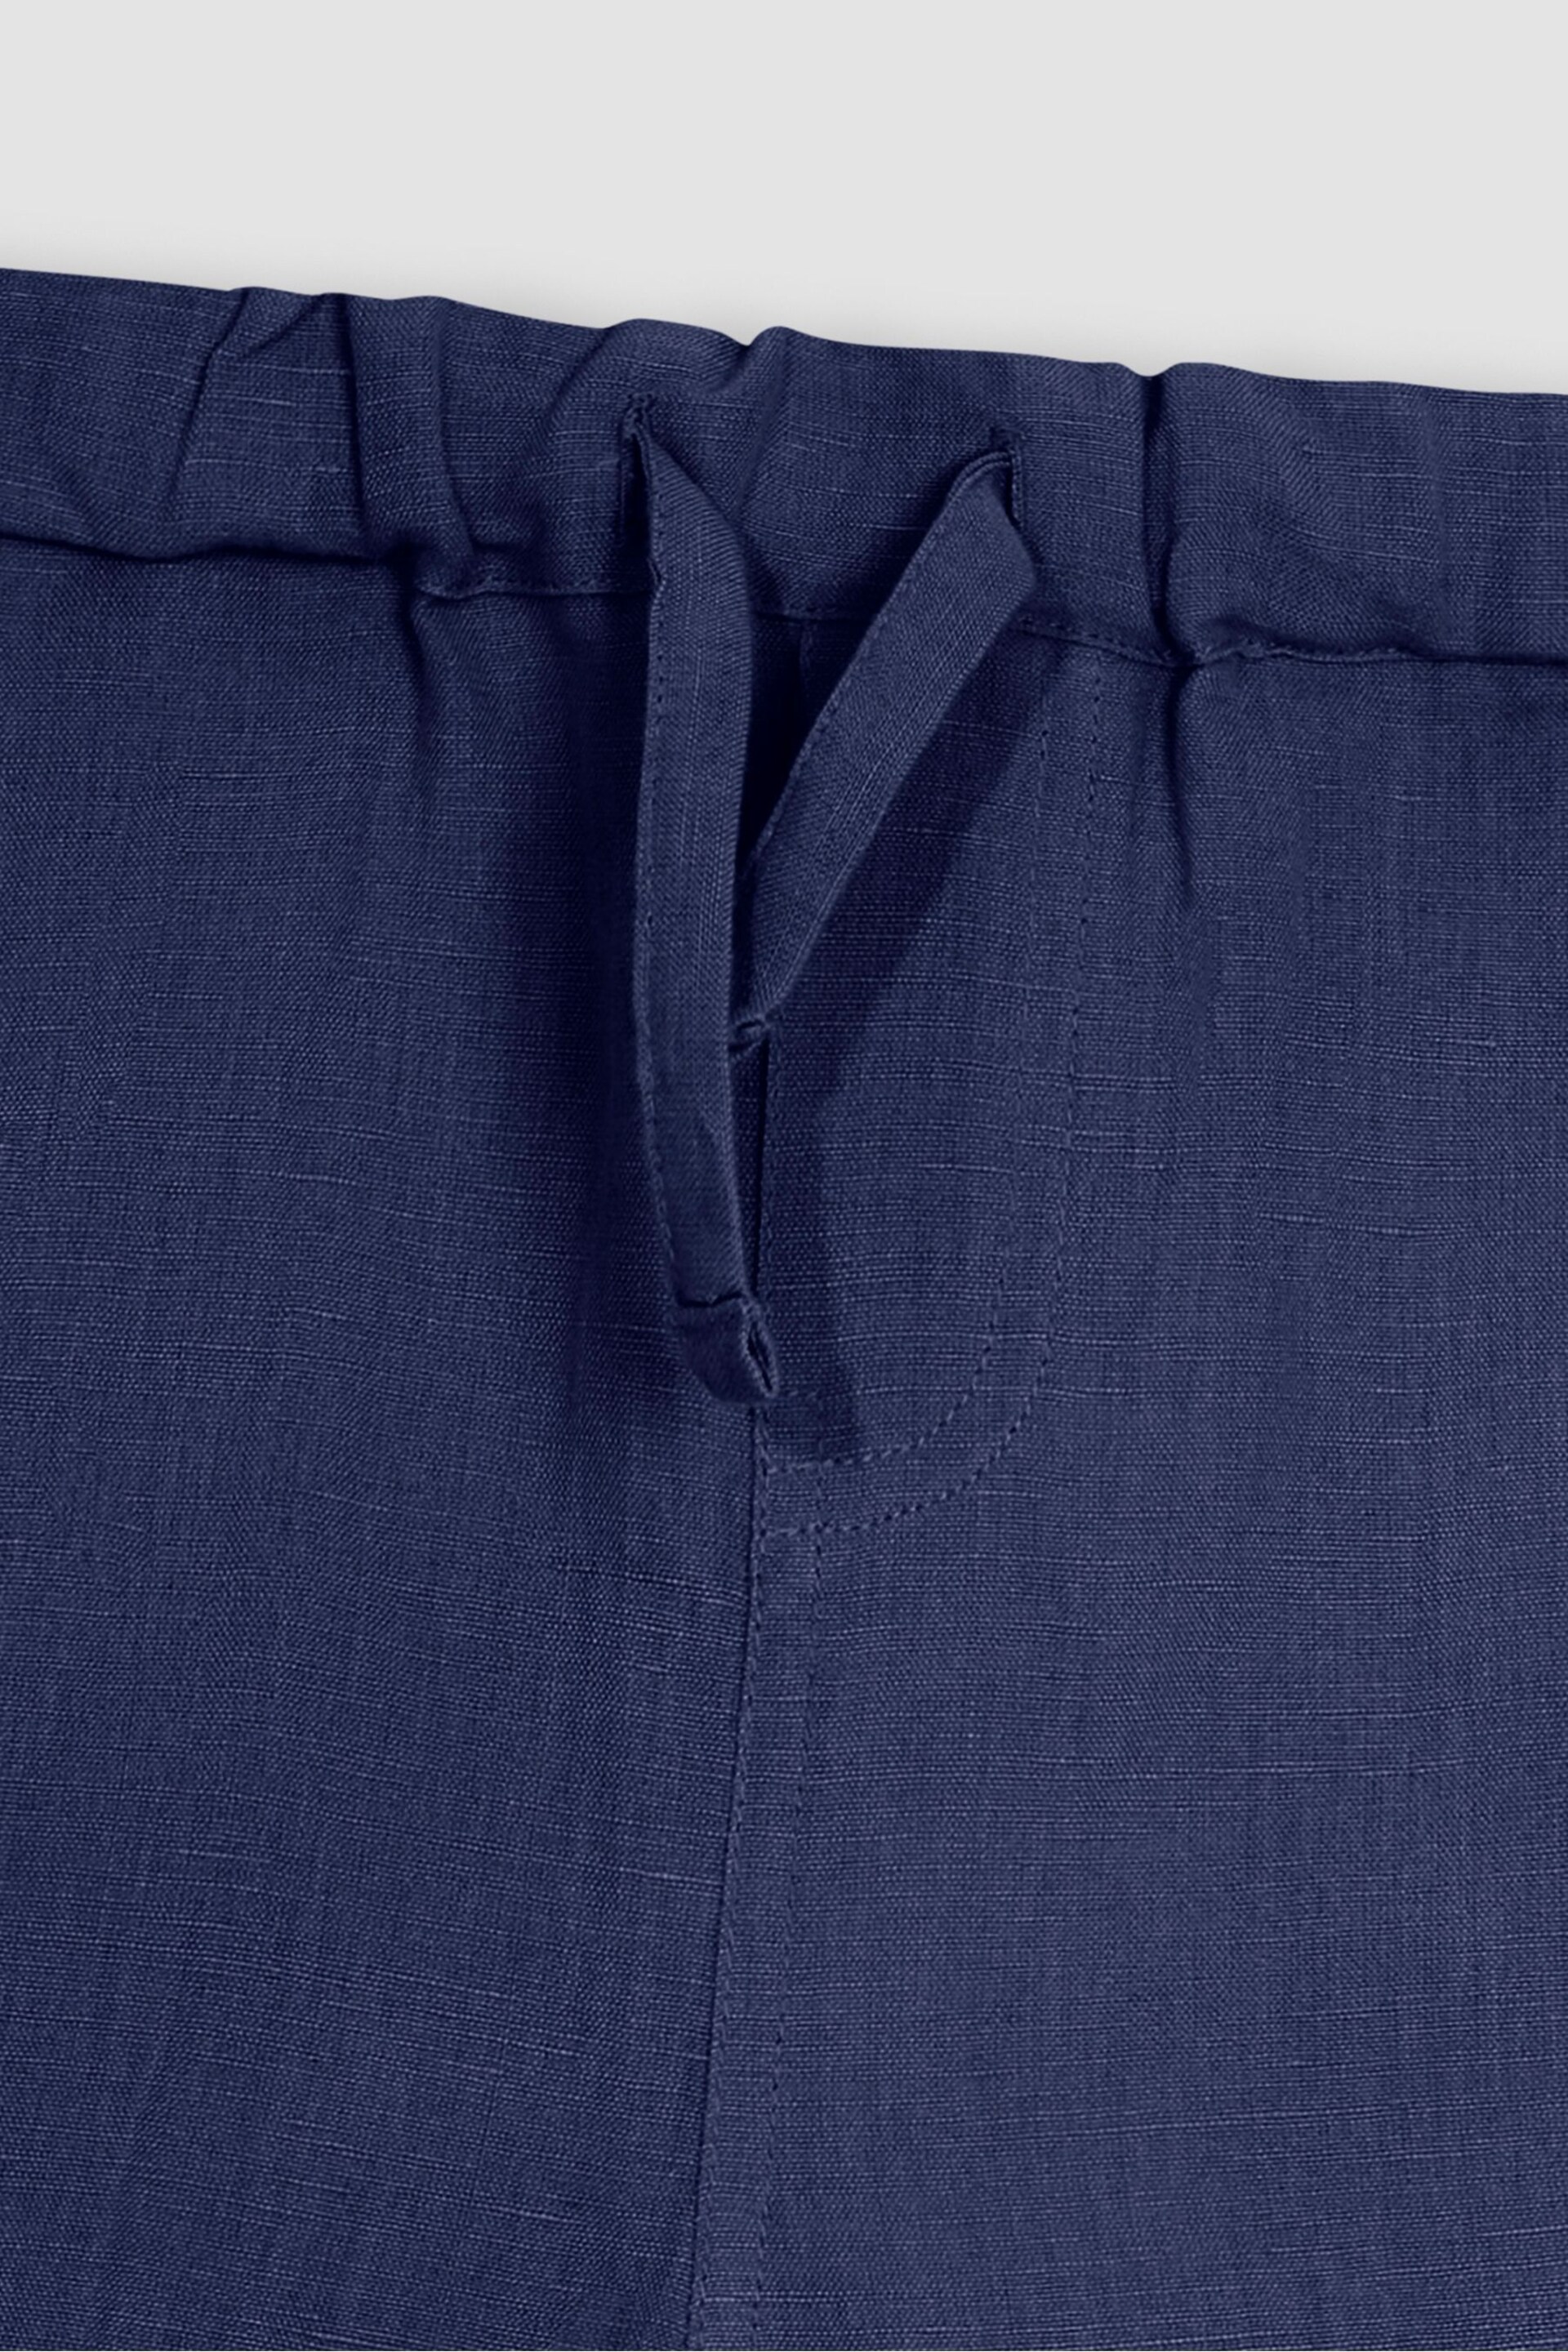 JoJo Maman Bébé Navy Cotton Linen Summer Trousers - Image 3 of 4